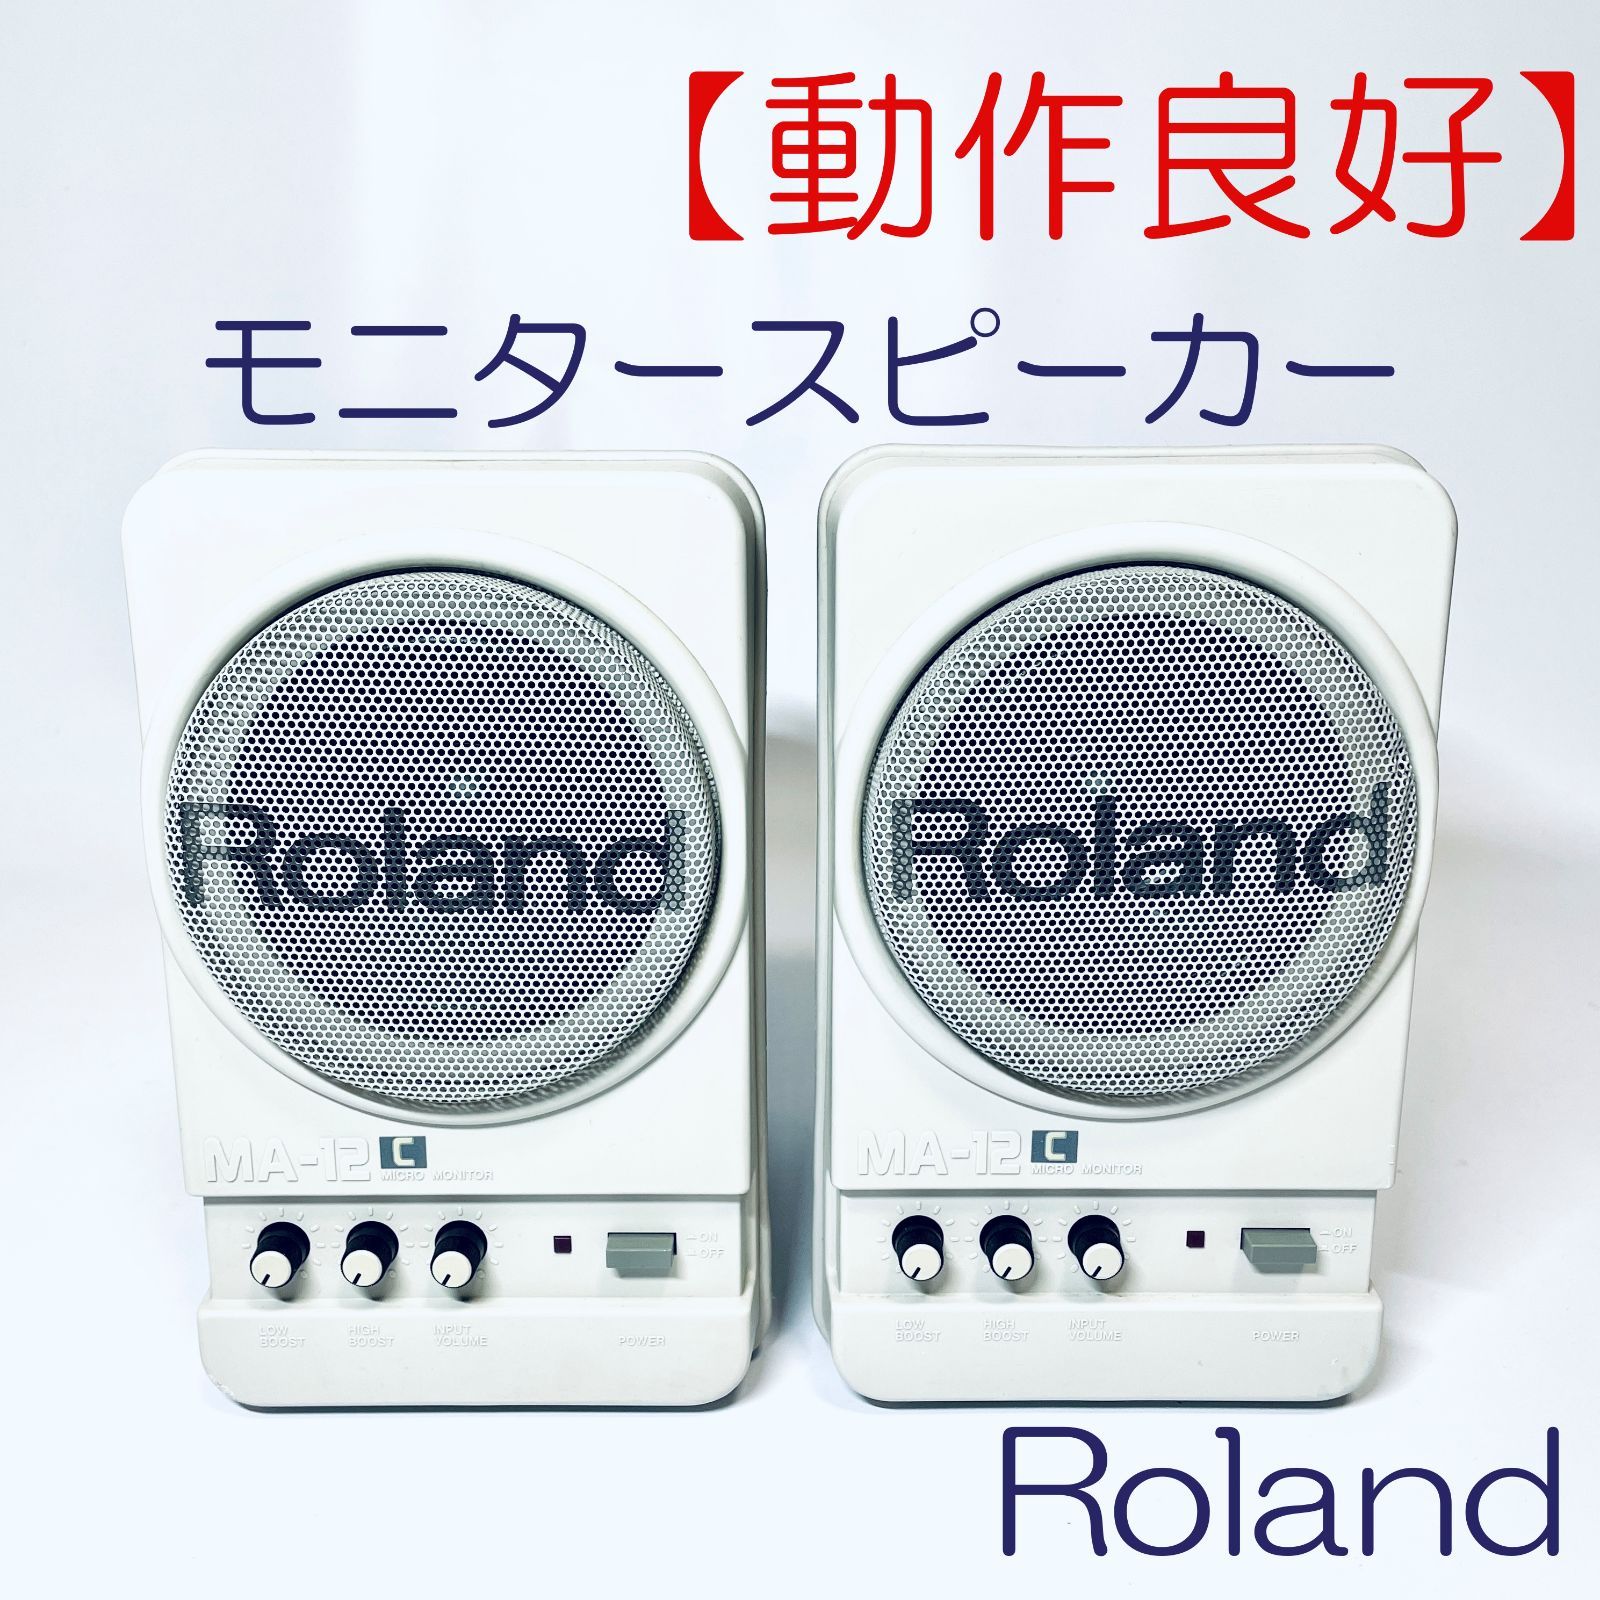 ROLAND　モニタースピーカー　MA-12CUモニタースピーカー